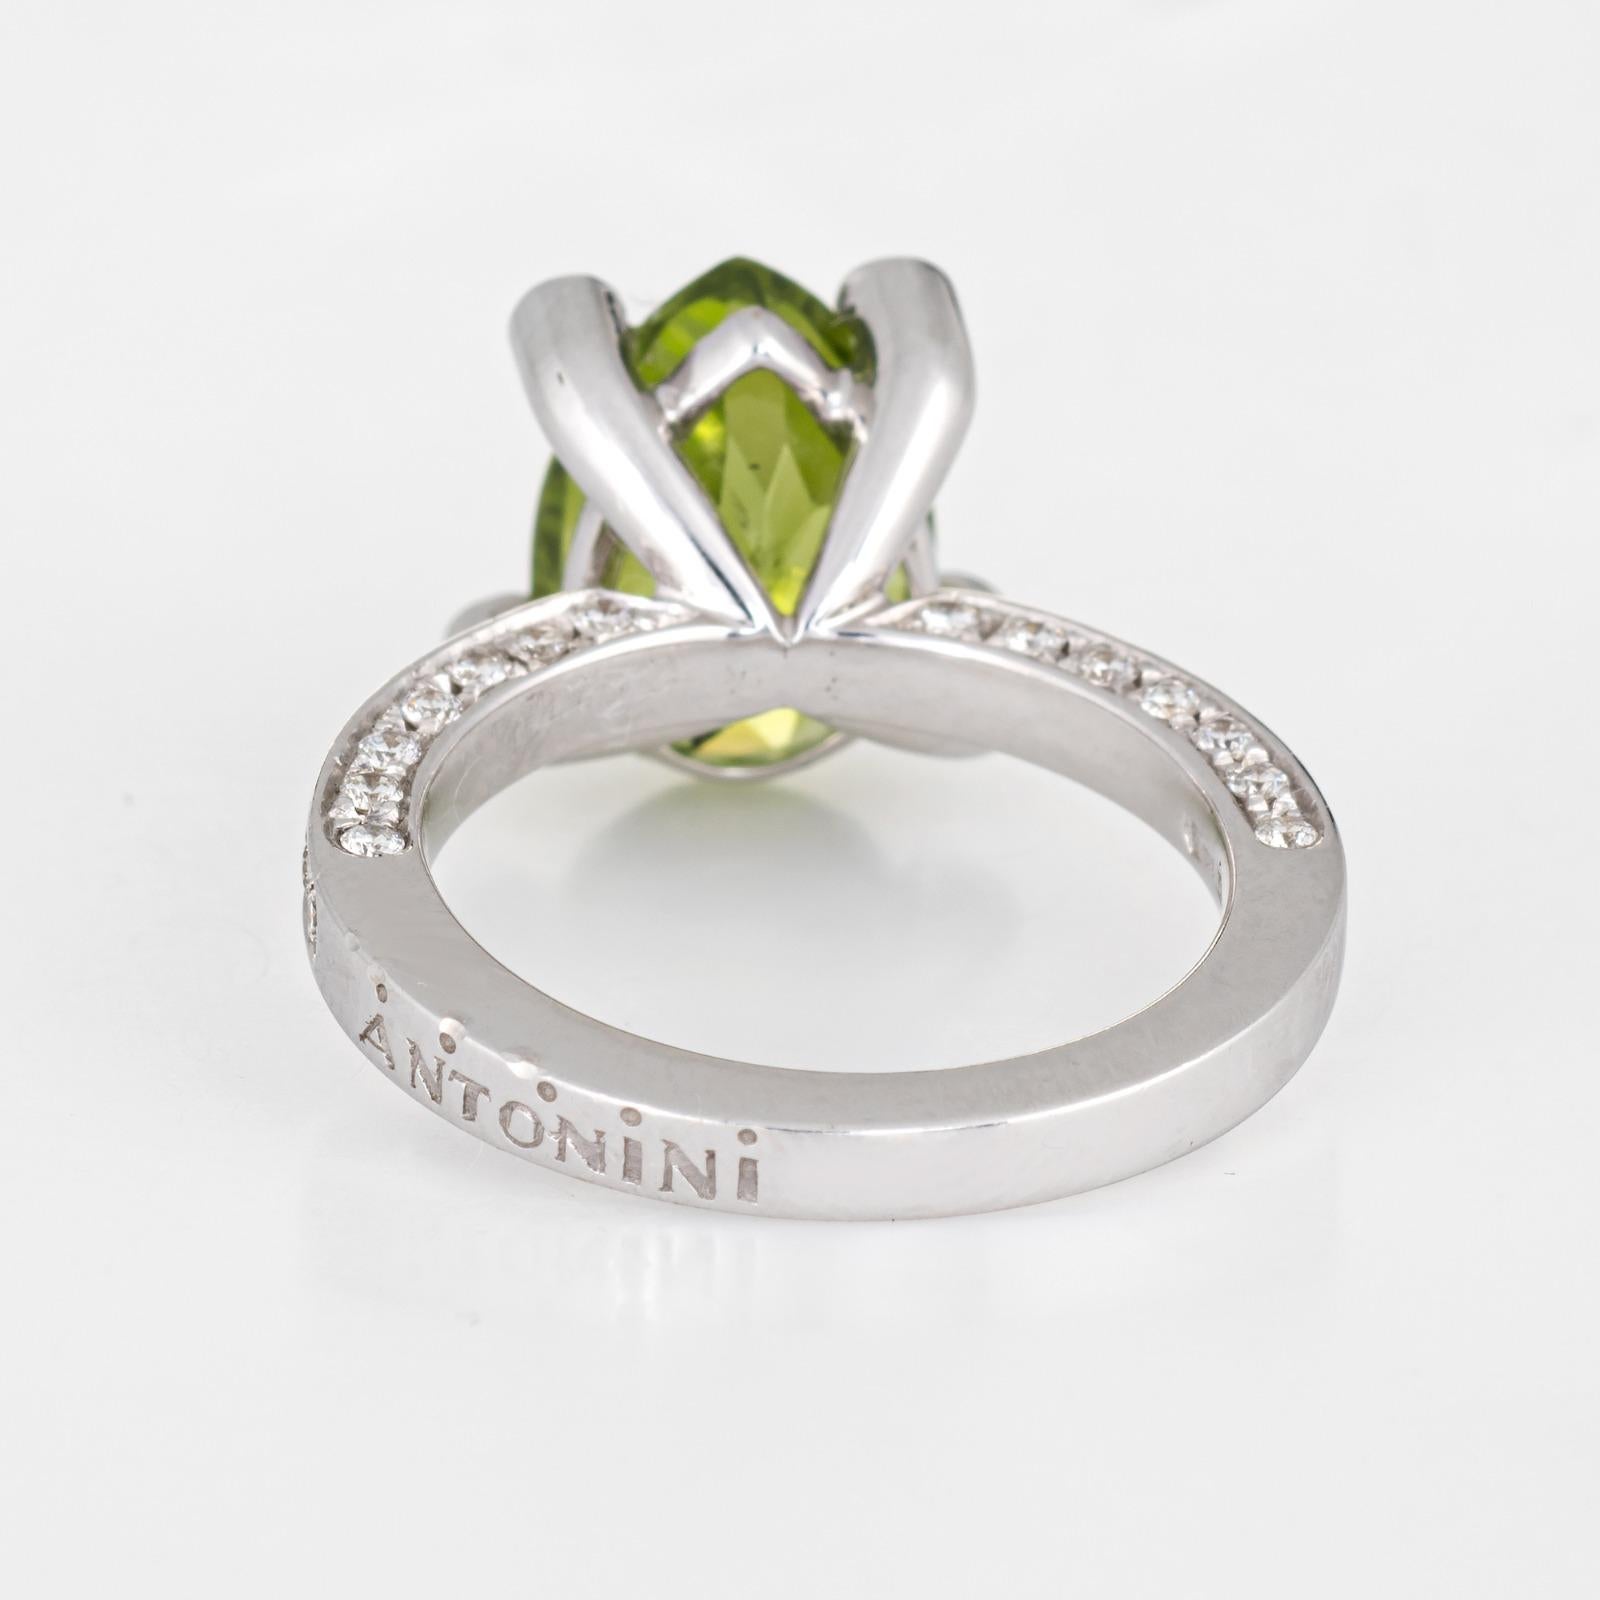 Contemporary Antonini Peridot Diamond Ring 18k White Gold Fine Designer Jewelry Cocktail For Sale